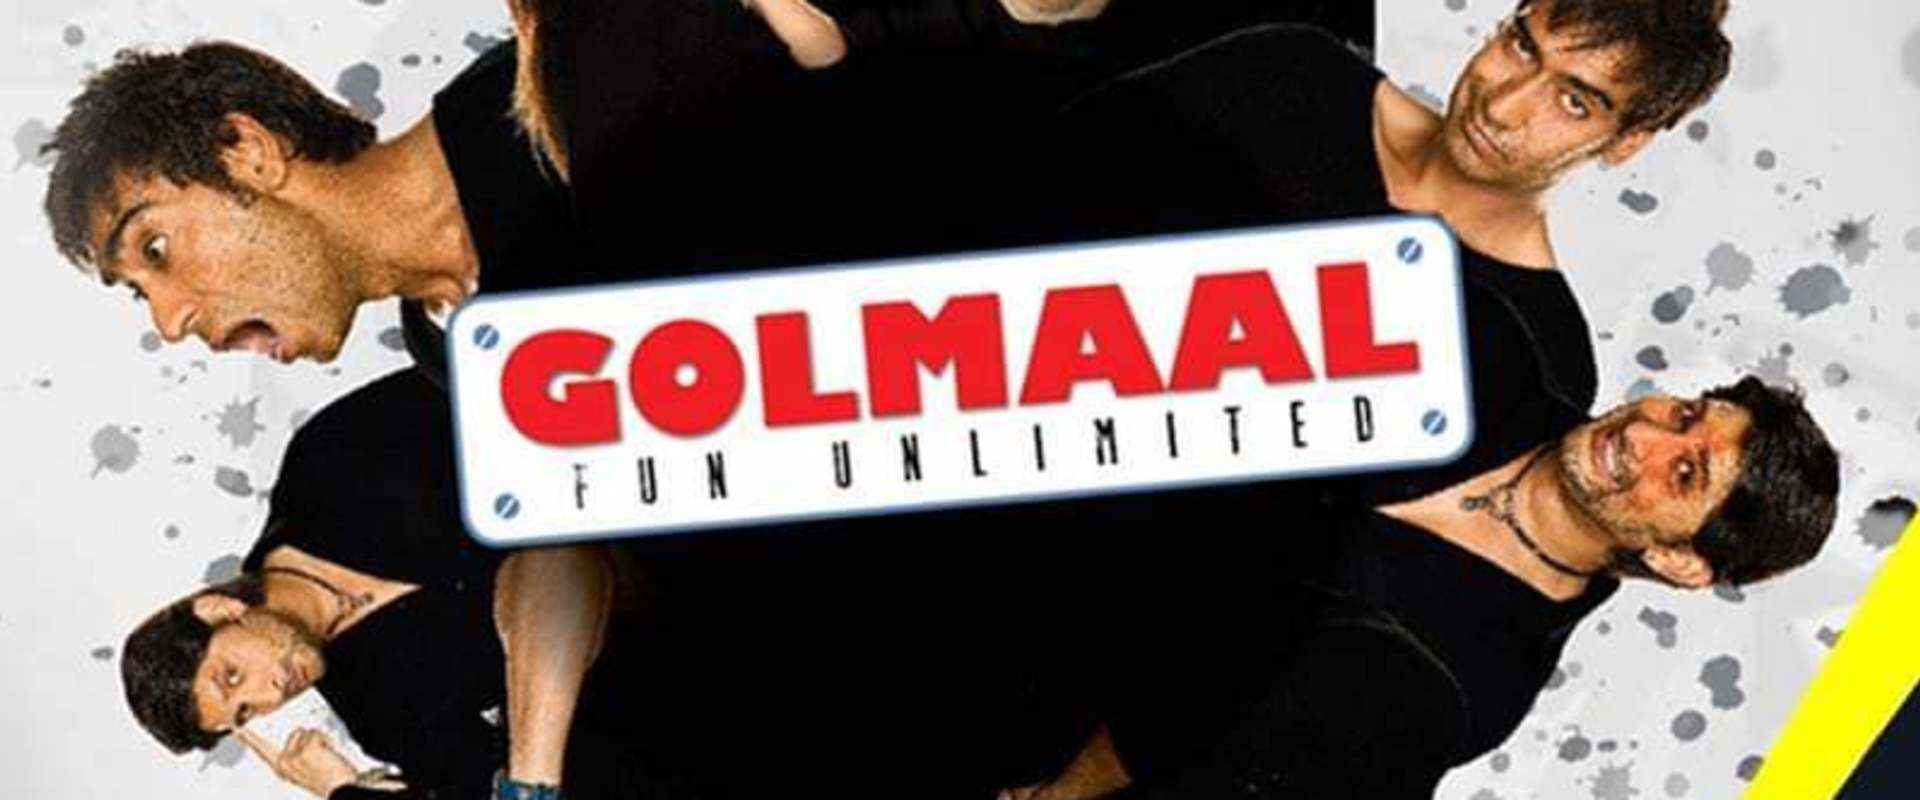 Golmaal - Fun Unlimited background 1